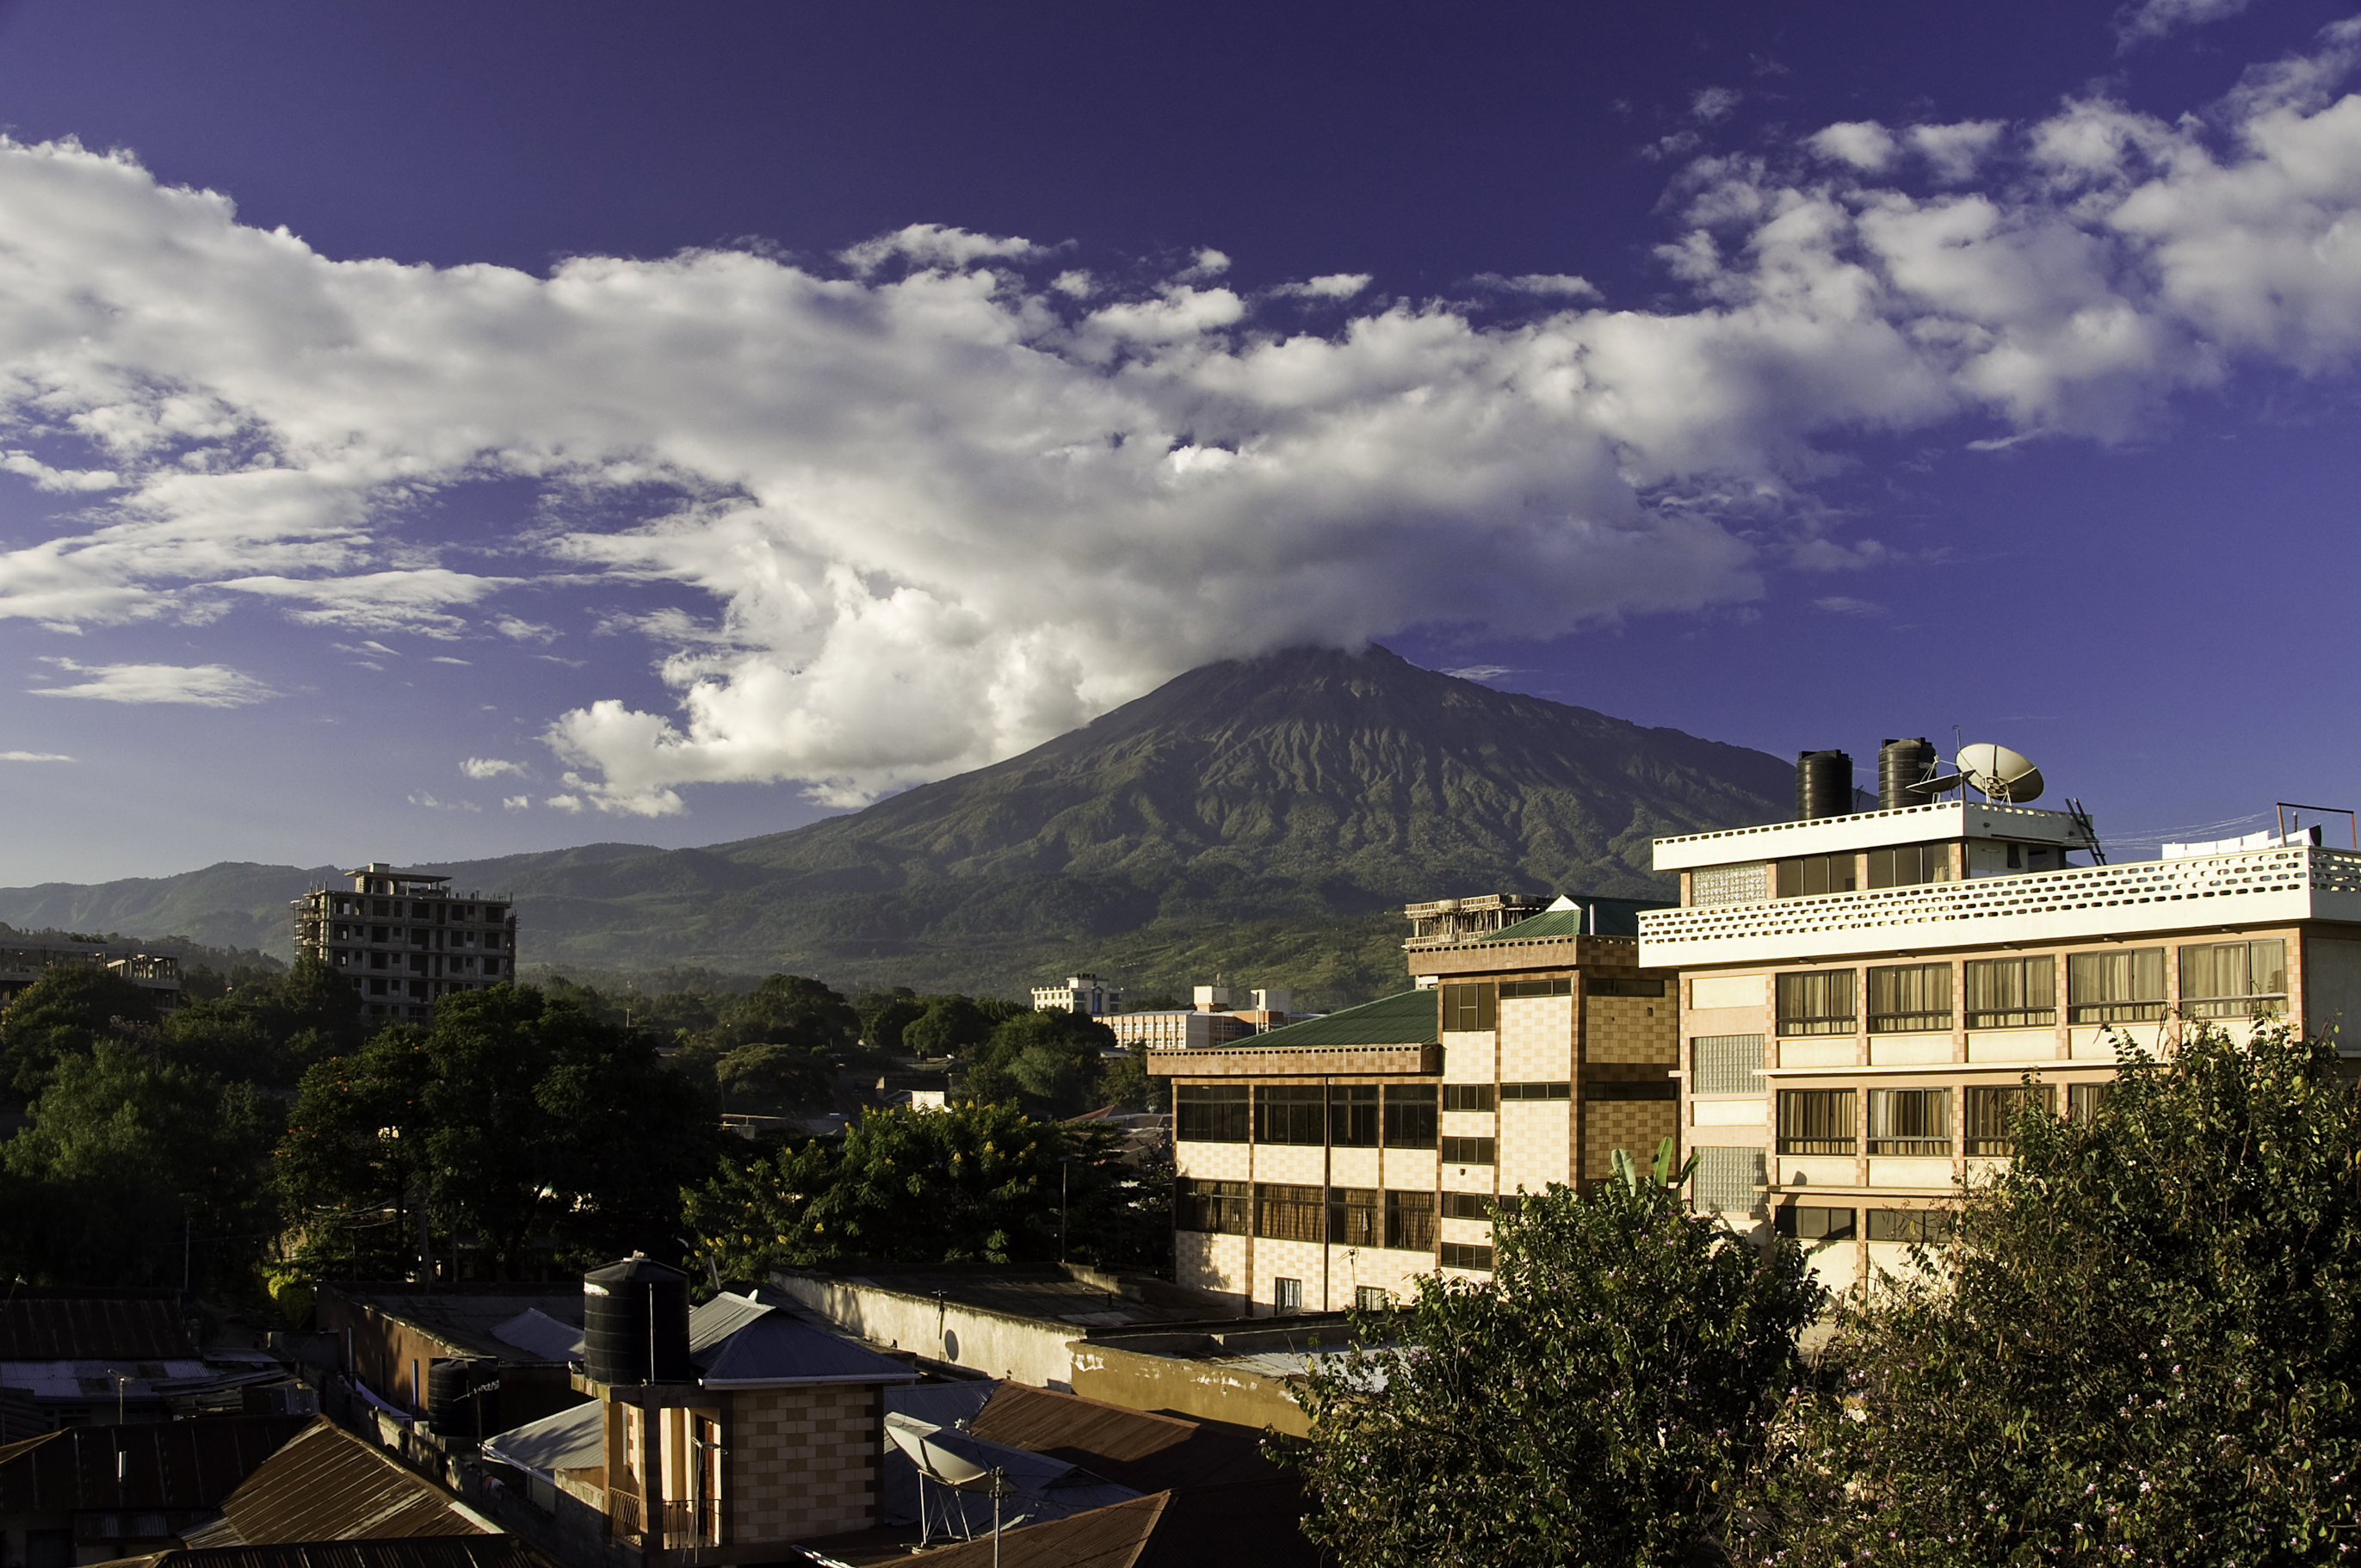 Mount Kilamanjaro behind Arusha buildings